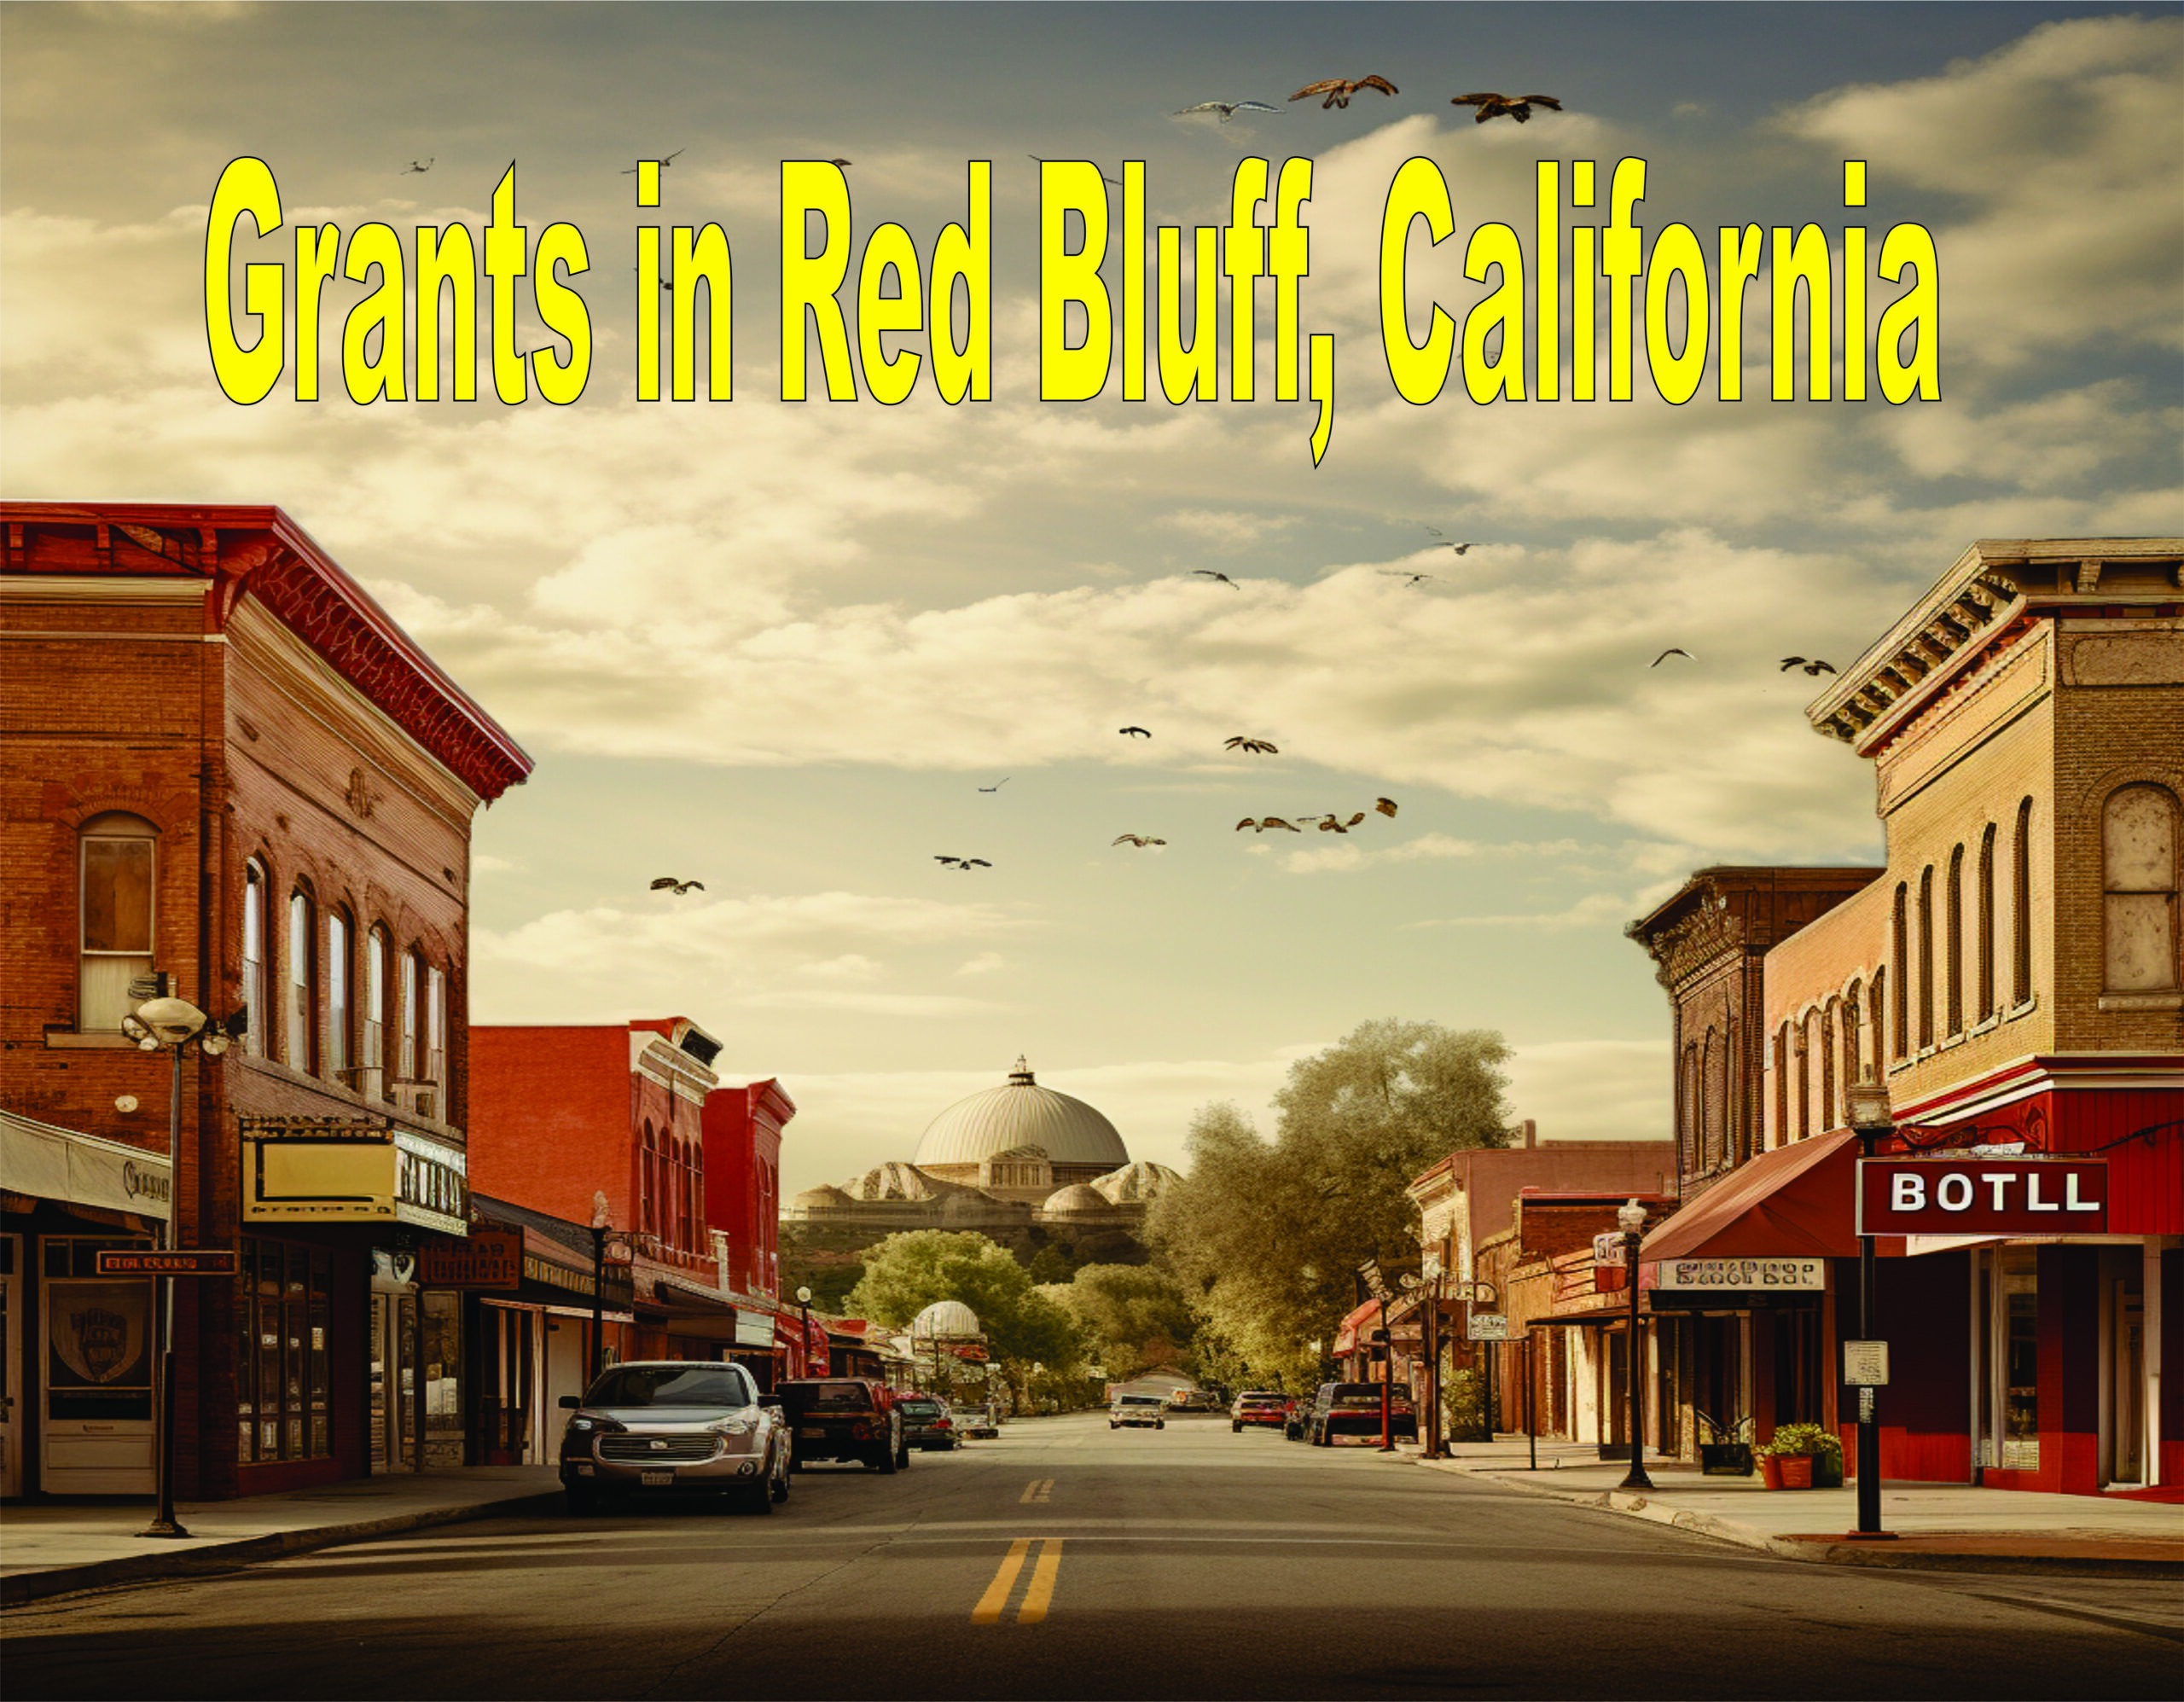 Grants In Red Bluff,california